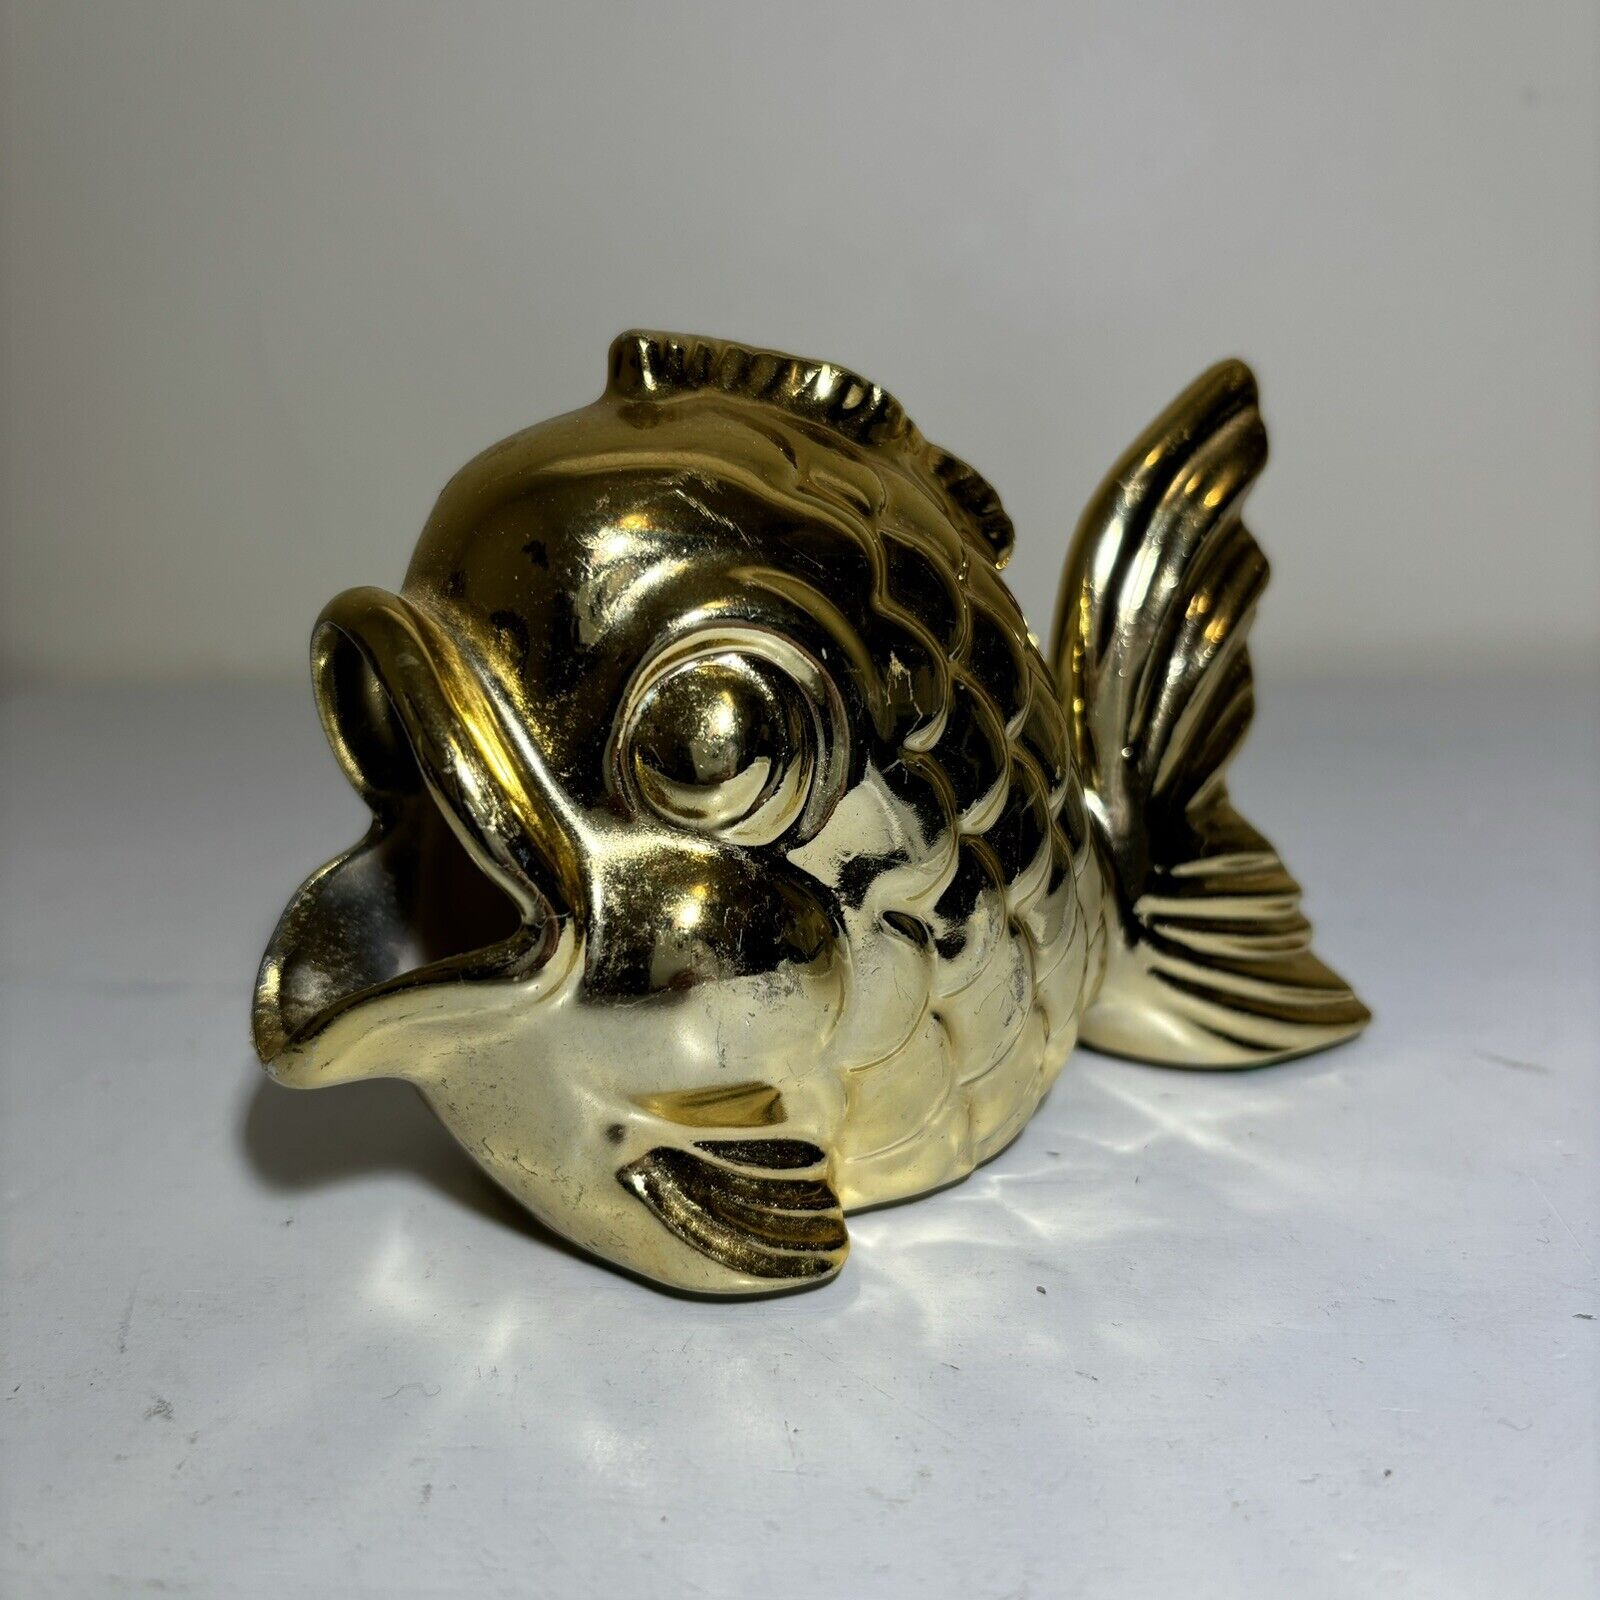 Vintage Big Mouth Fish Ashtray Metallic Gold Japanese Koi Kitsch Retro Japan MCM